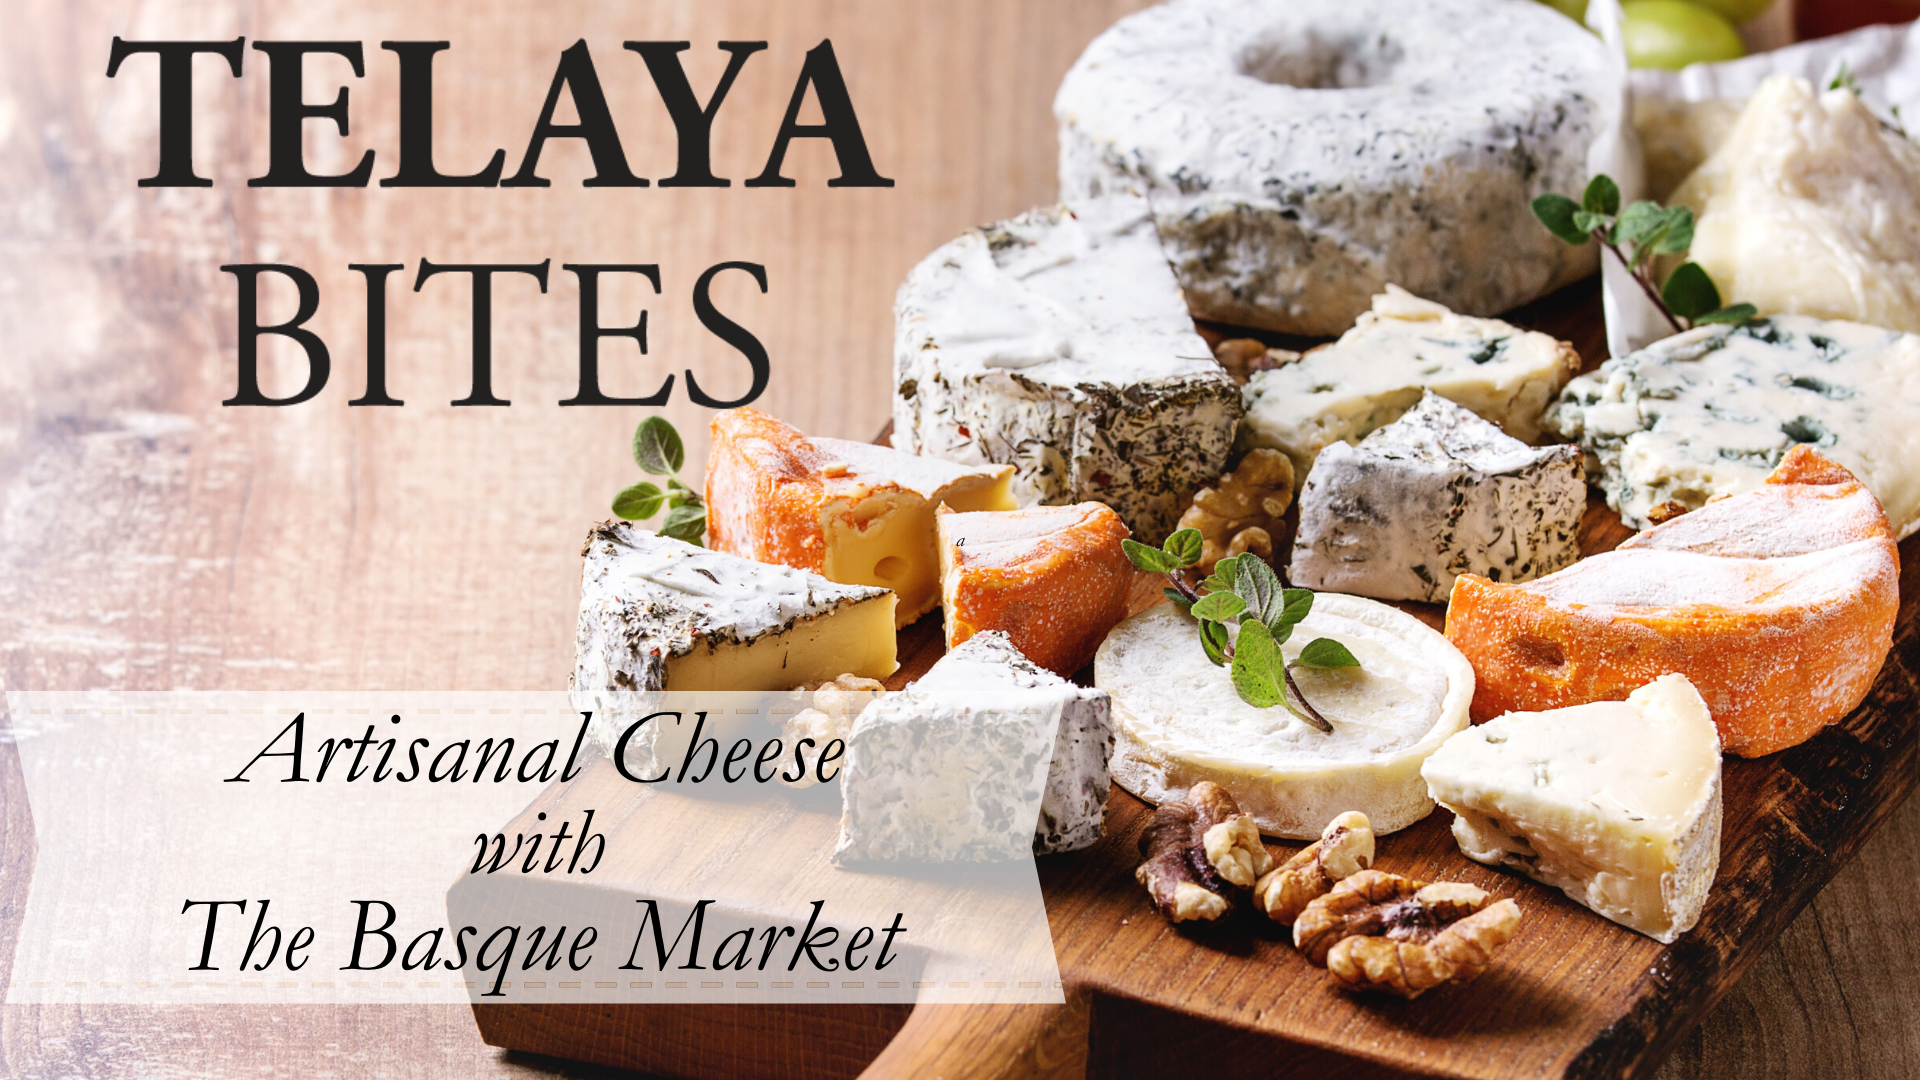 Telaya Bites: Artisanal Cheese with The Basque Market